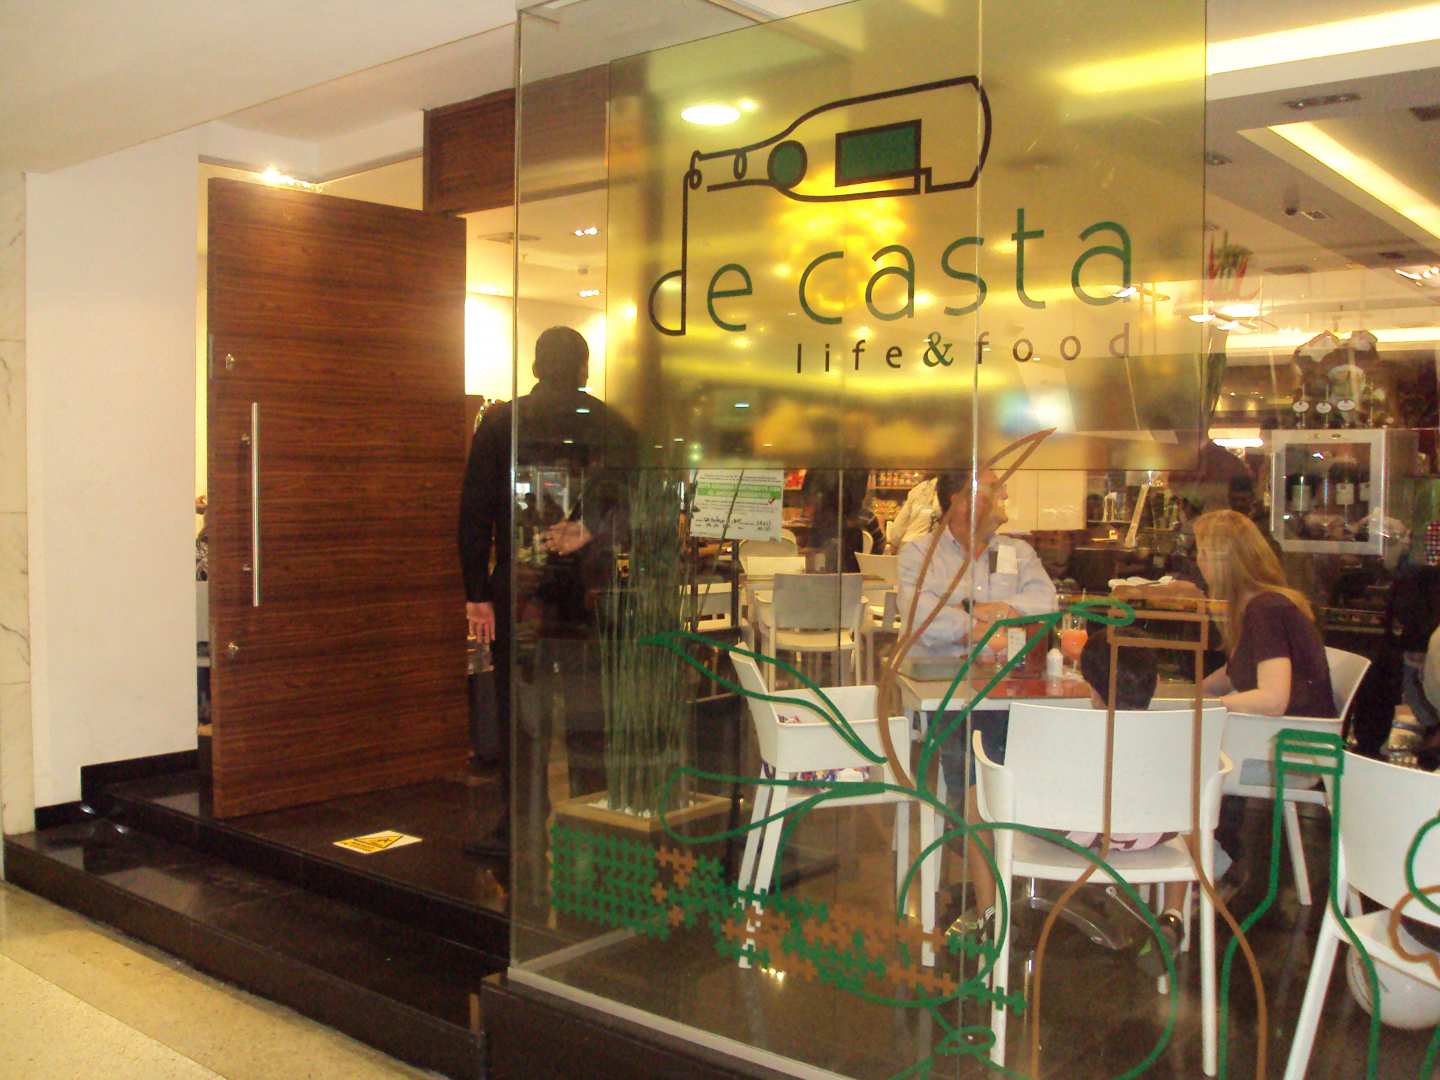 De Casta Life & Food